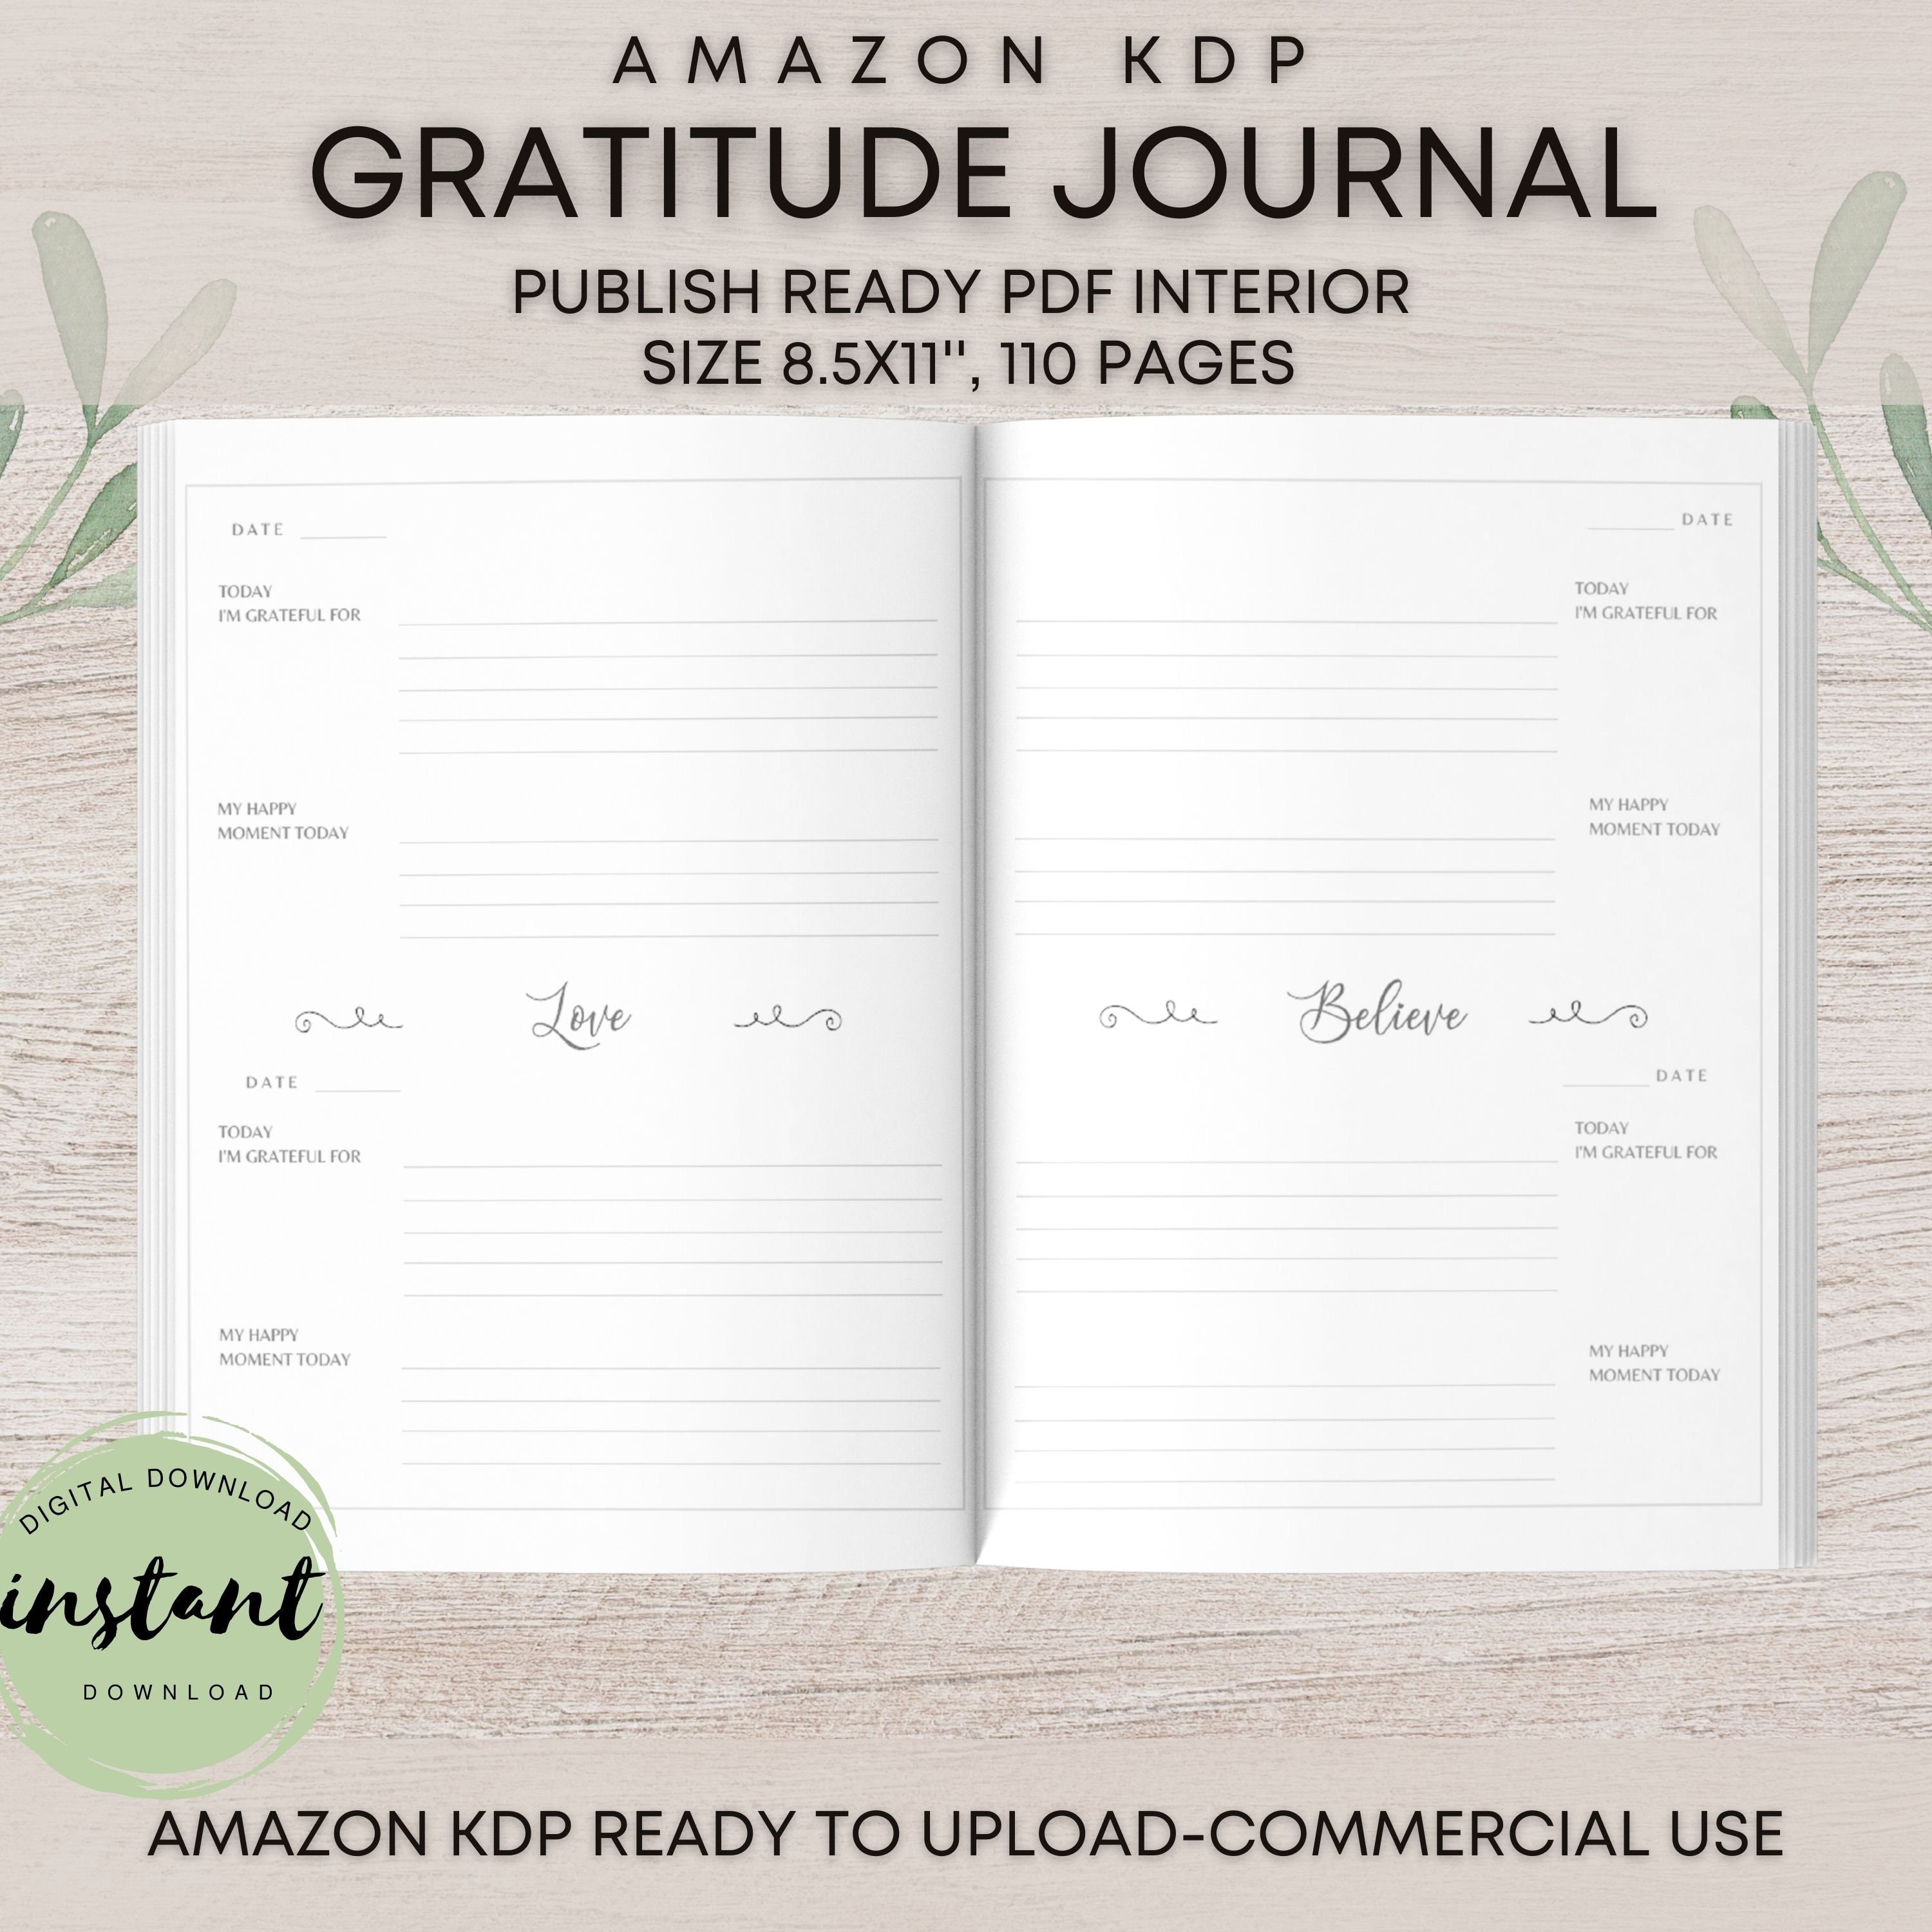 2023 Gratitude Journal KDP Interior #272800 - TemplateMonster